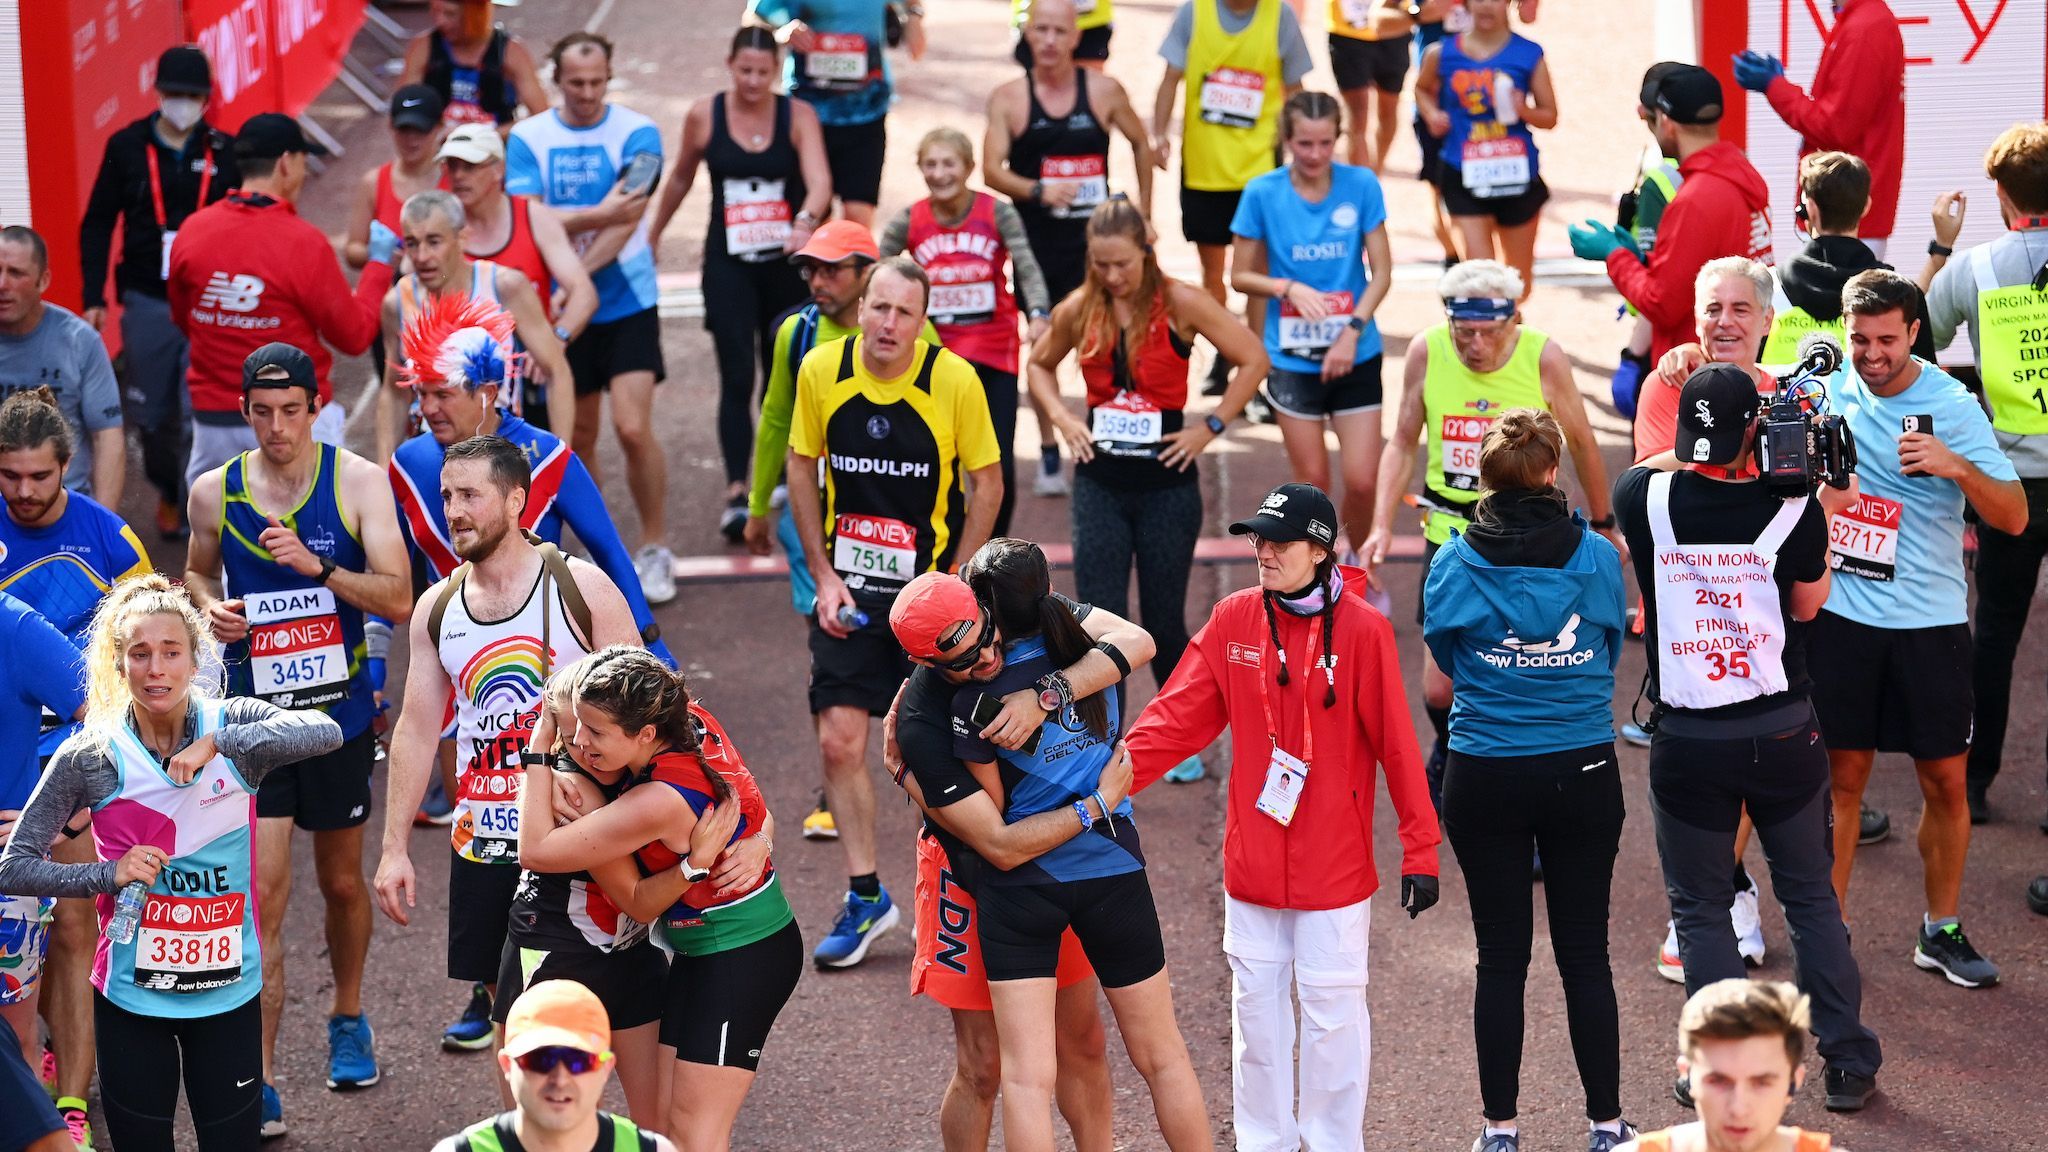 London Marathon runners celebrate crossing the finish line in 2021